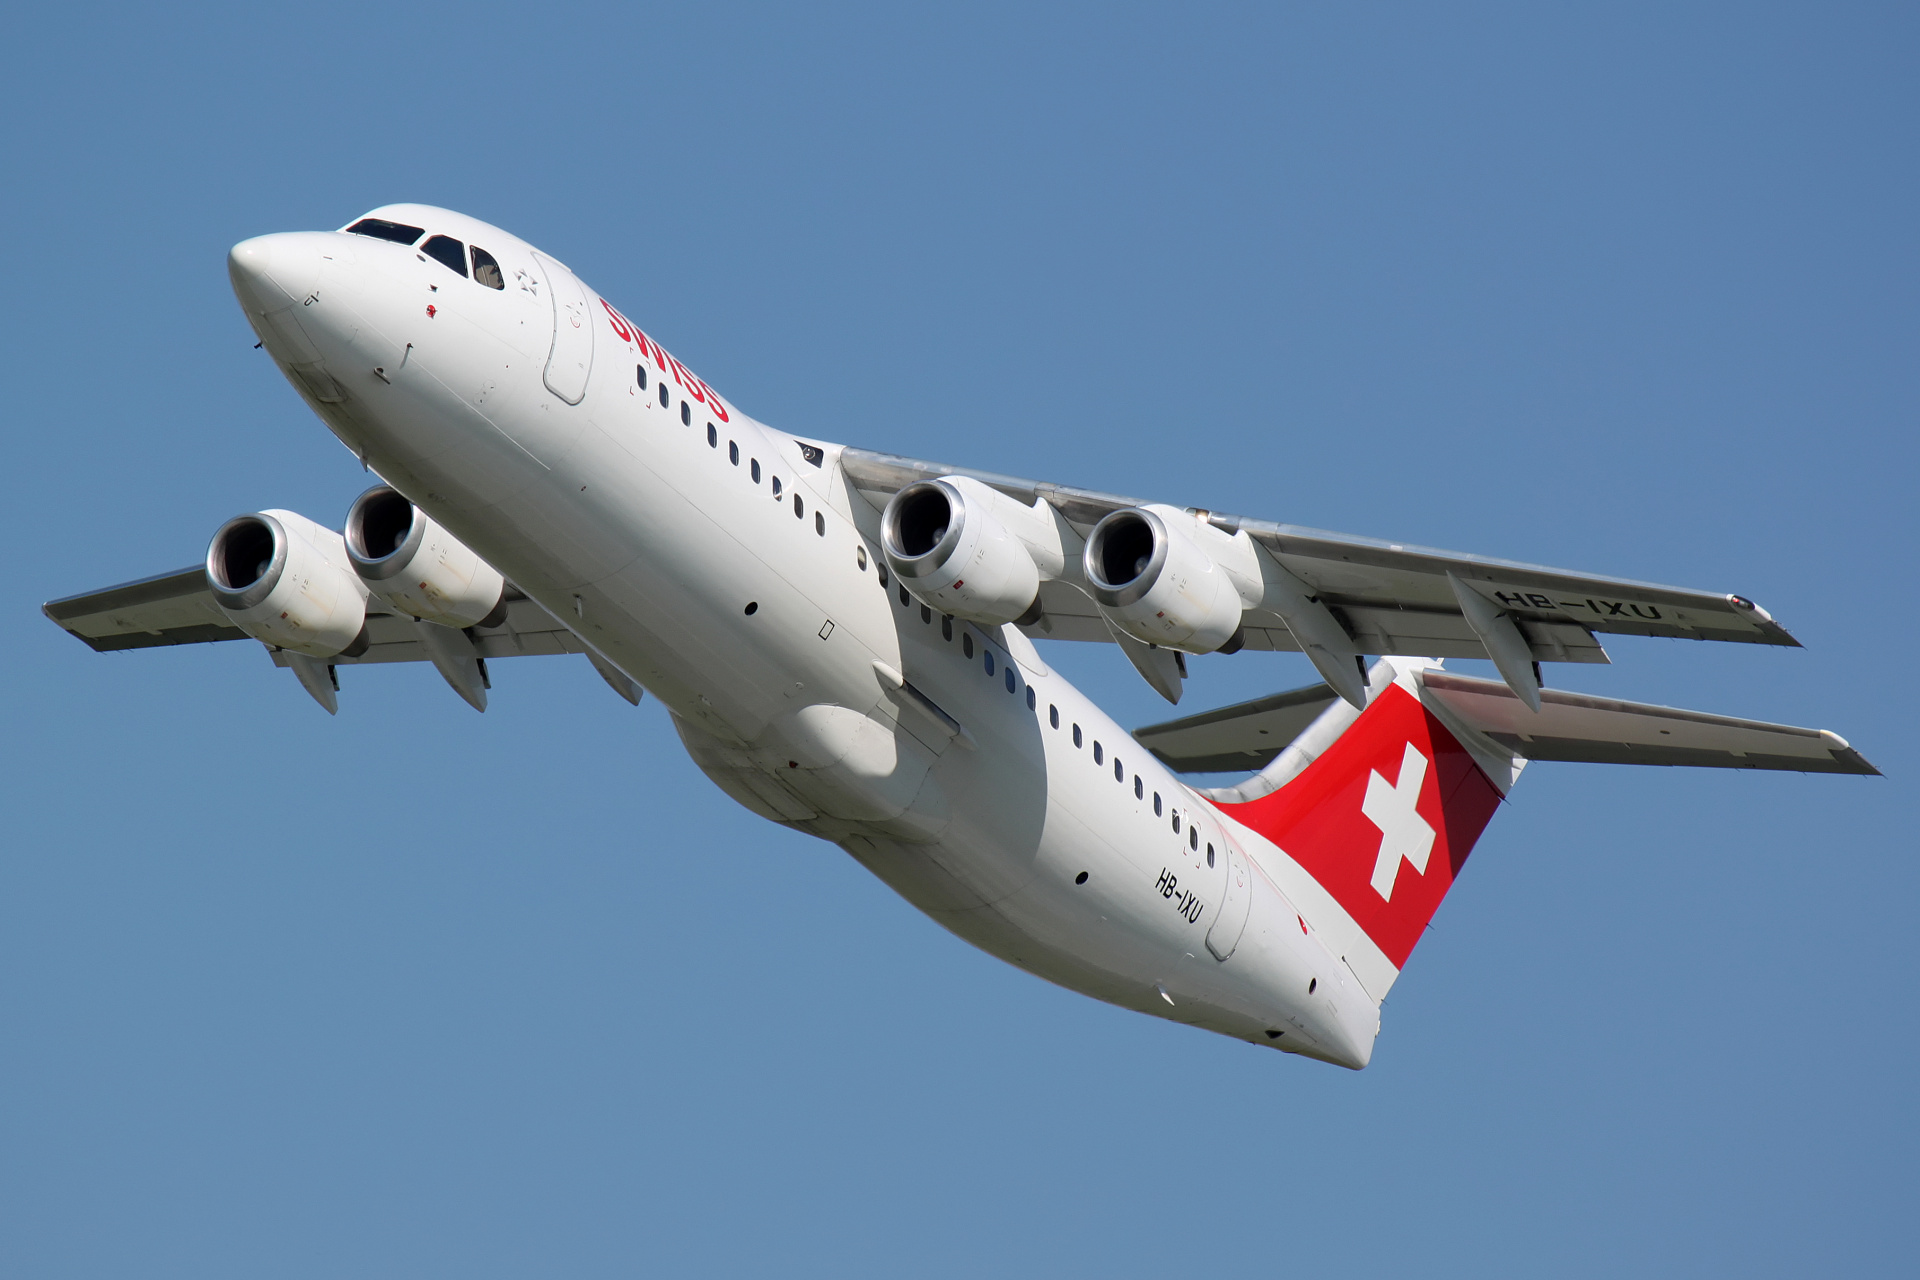 HB-IXU (Aircraft » EPWA Spotting » BAe 146 and revisions » Avro RJ100 » Swiss Global Air Lines)